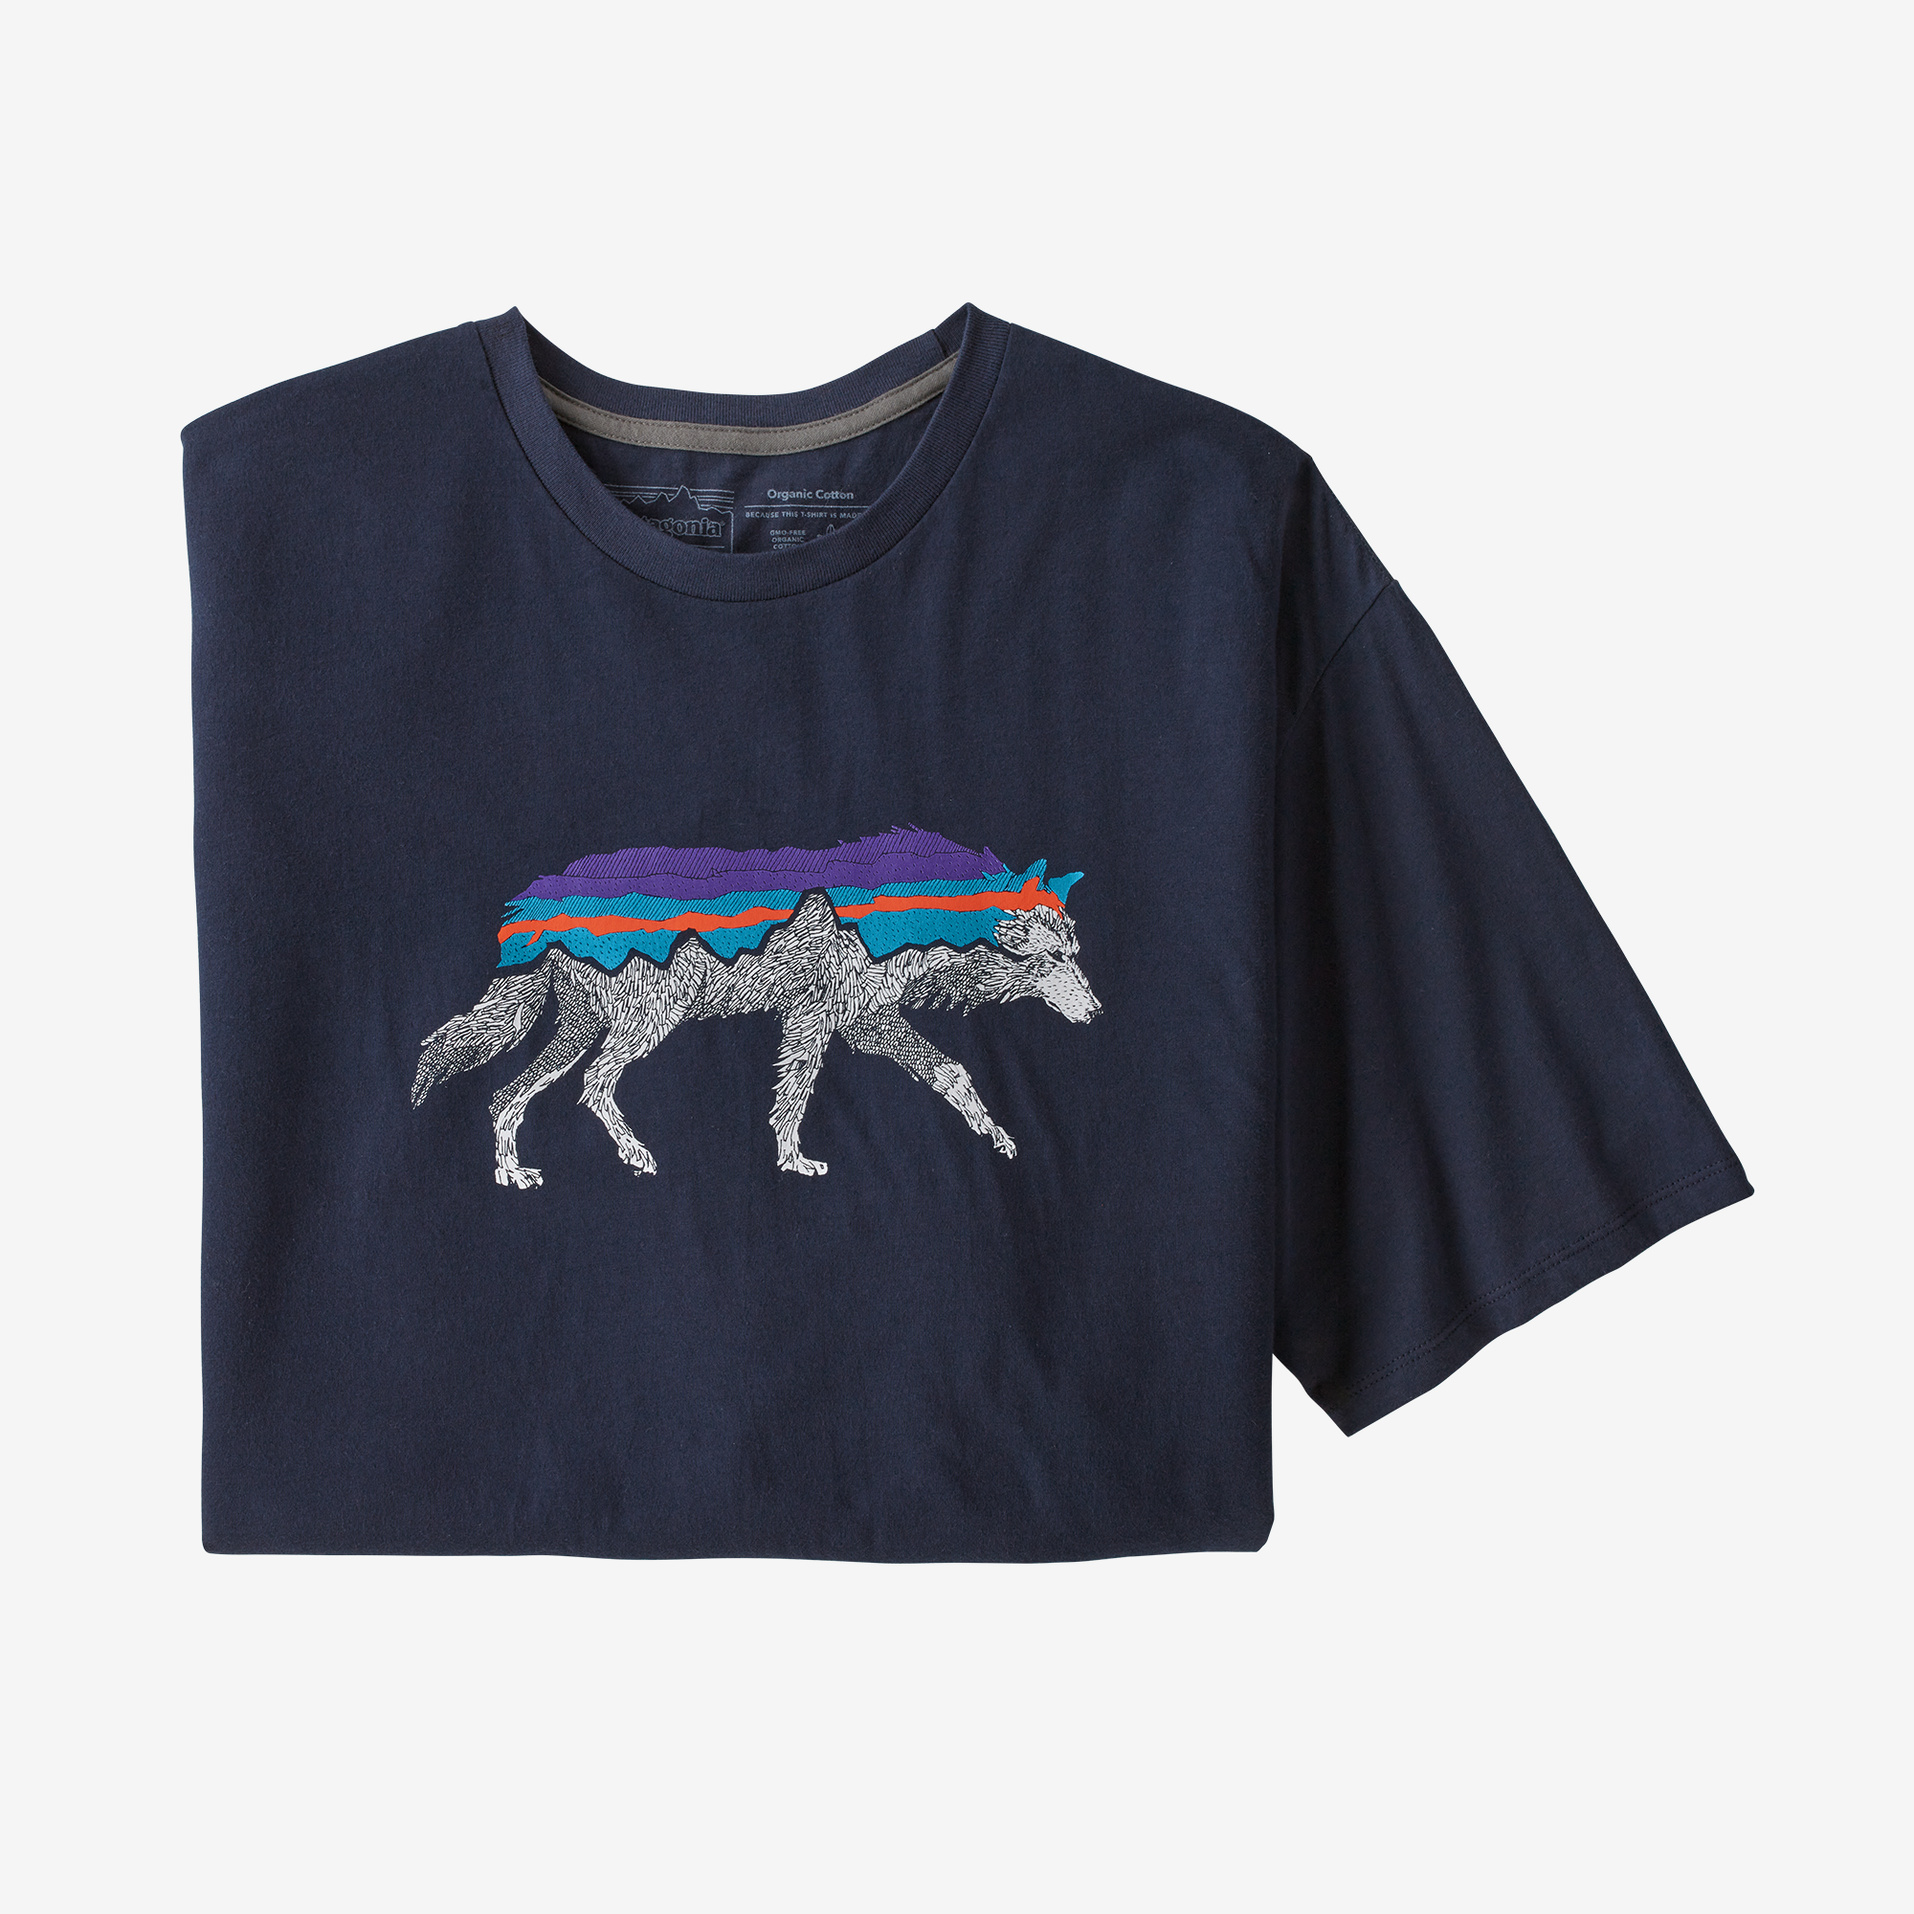 Patagonia M's Back For Good Organic T-Shirt - New Navy w/ Wolf - Medium